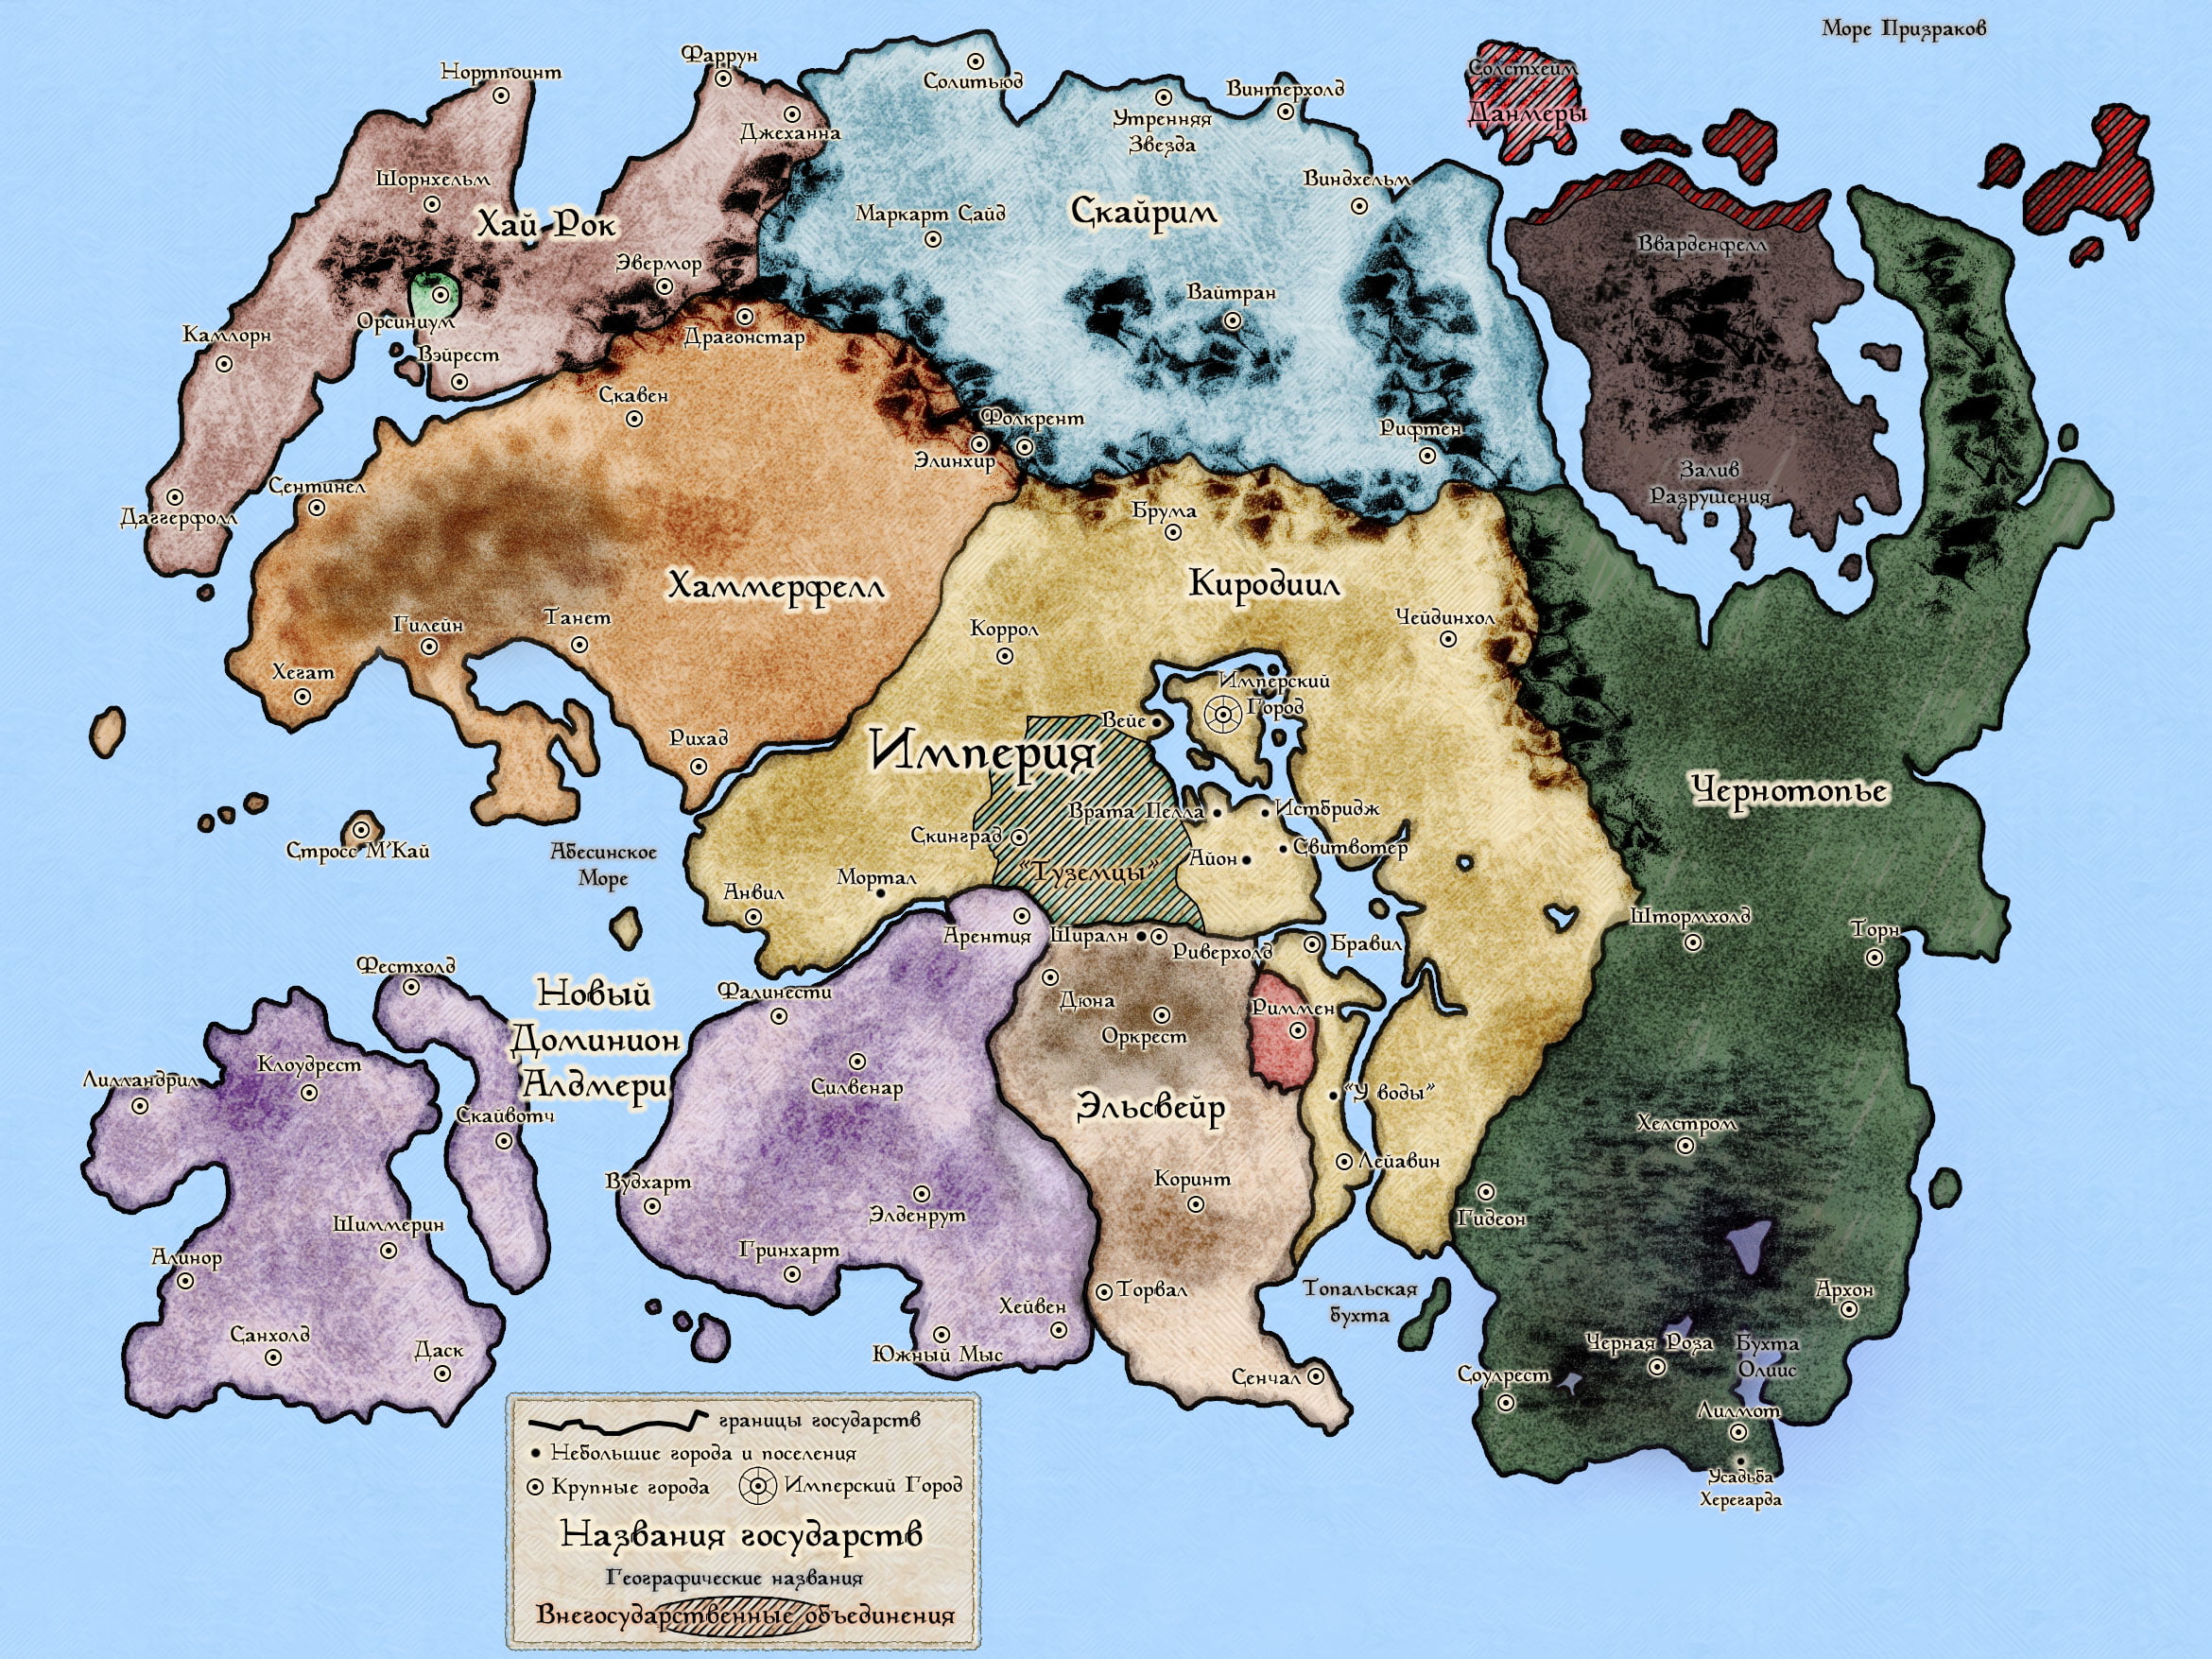 Elder Scrolls Oblivion World Map World map poster, The Elder Scrolls V: Skyrim, The Elder Scrolls 